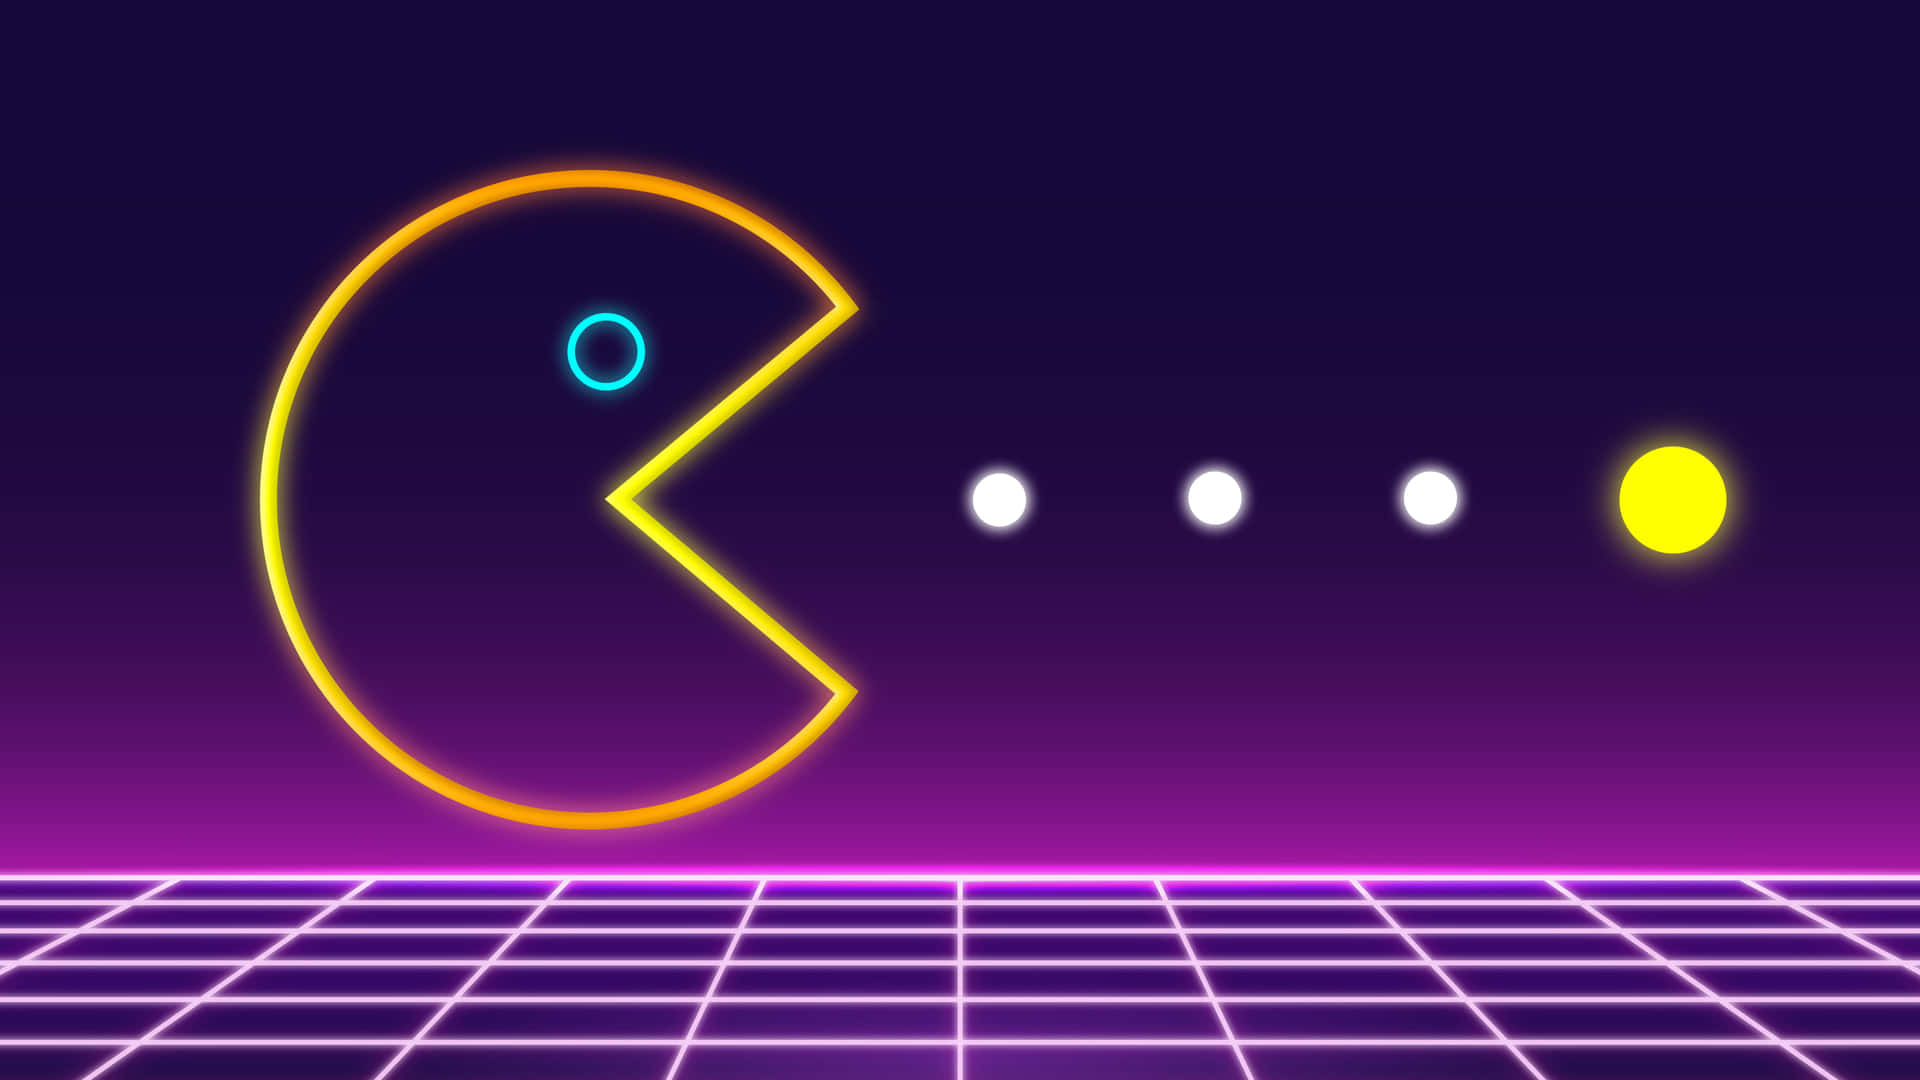 Pac-man - The Arcade Game